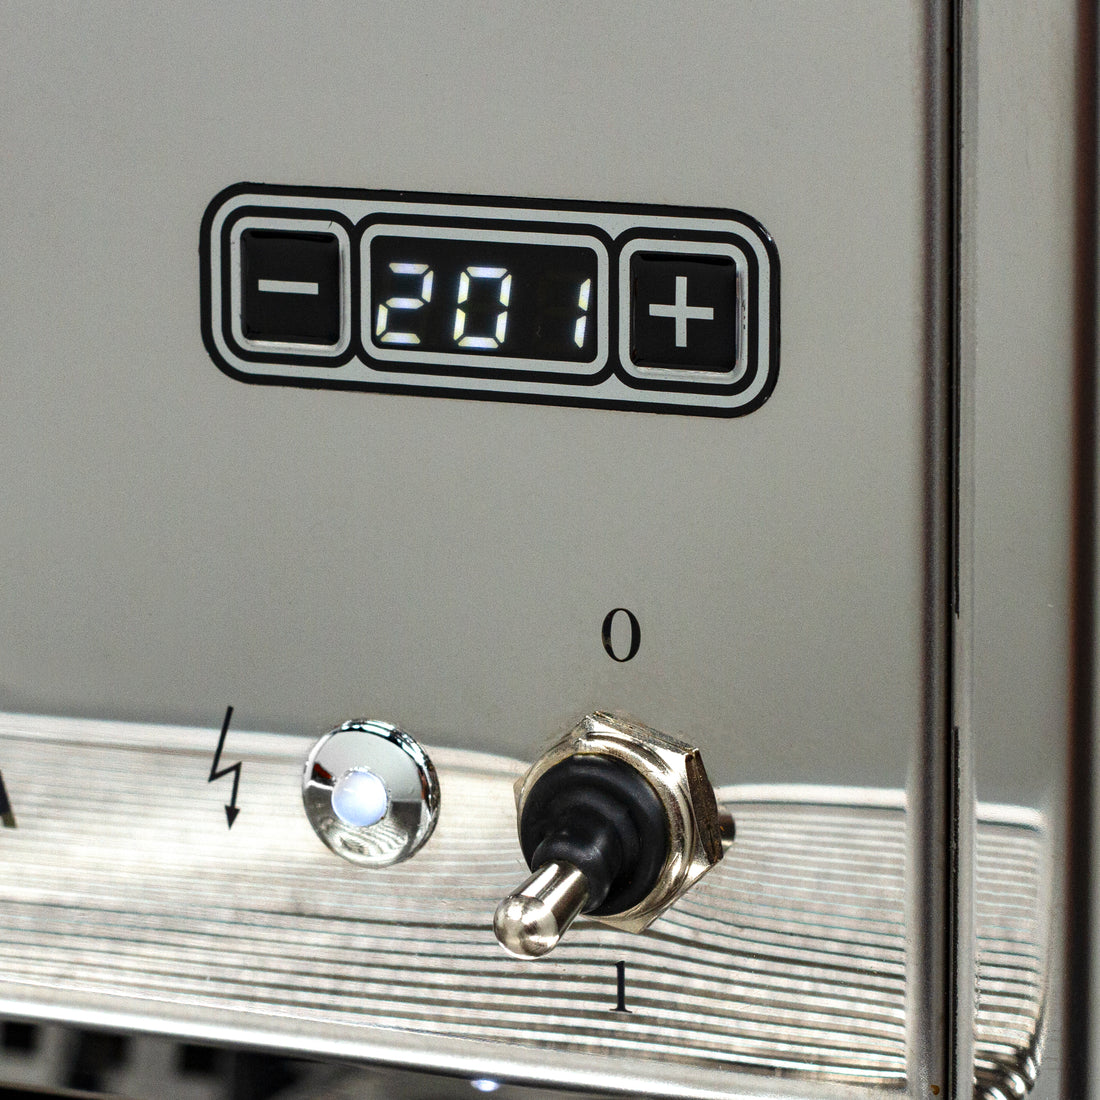 Bezzera BZ13 DE Nera Espresso Machine - Rosewood - Special Edition